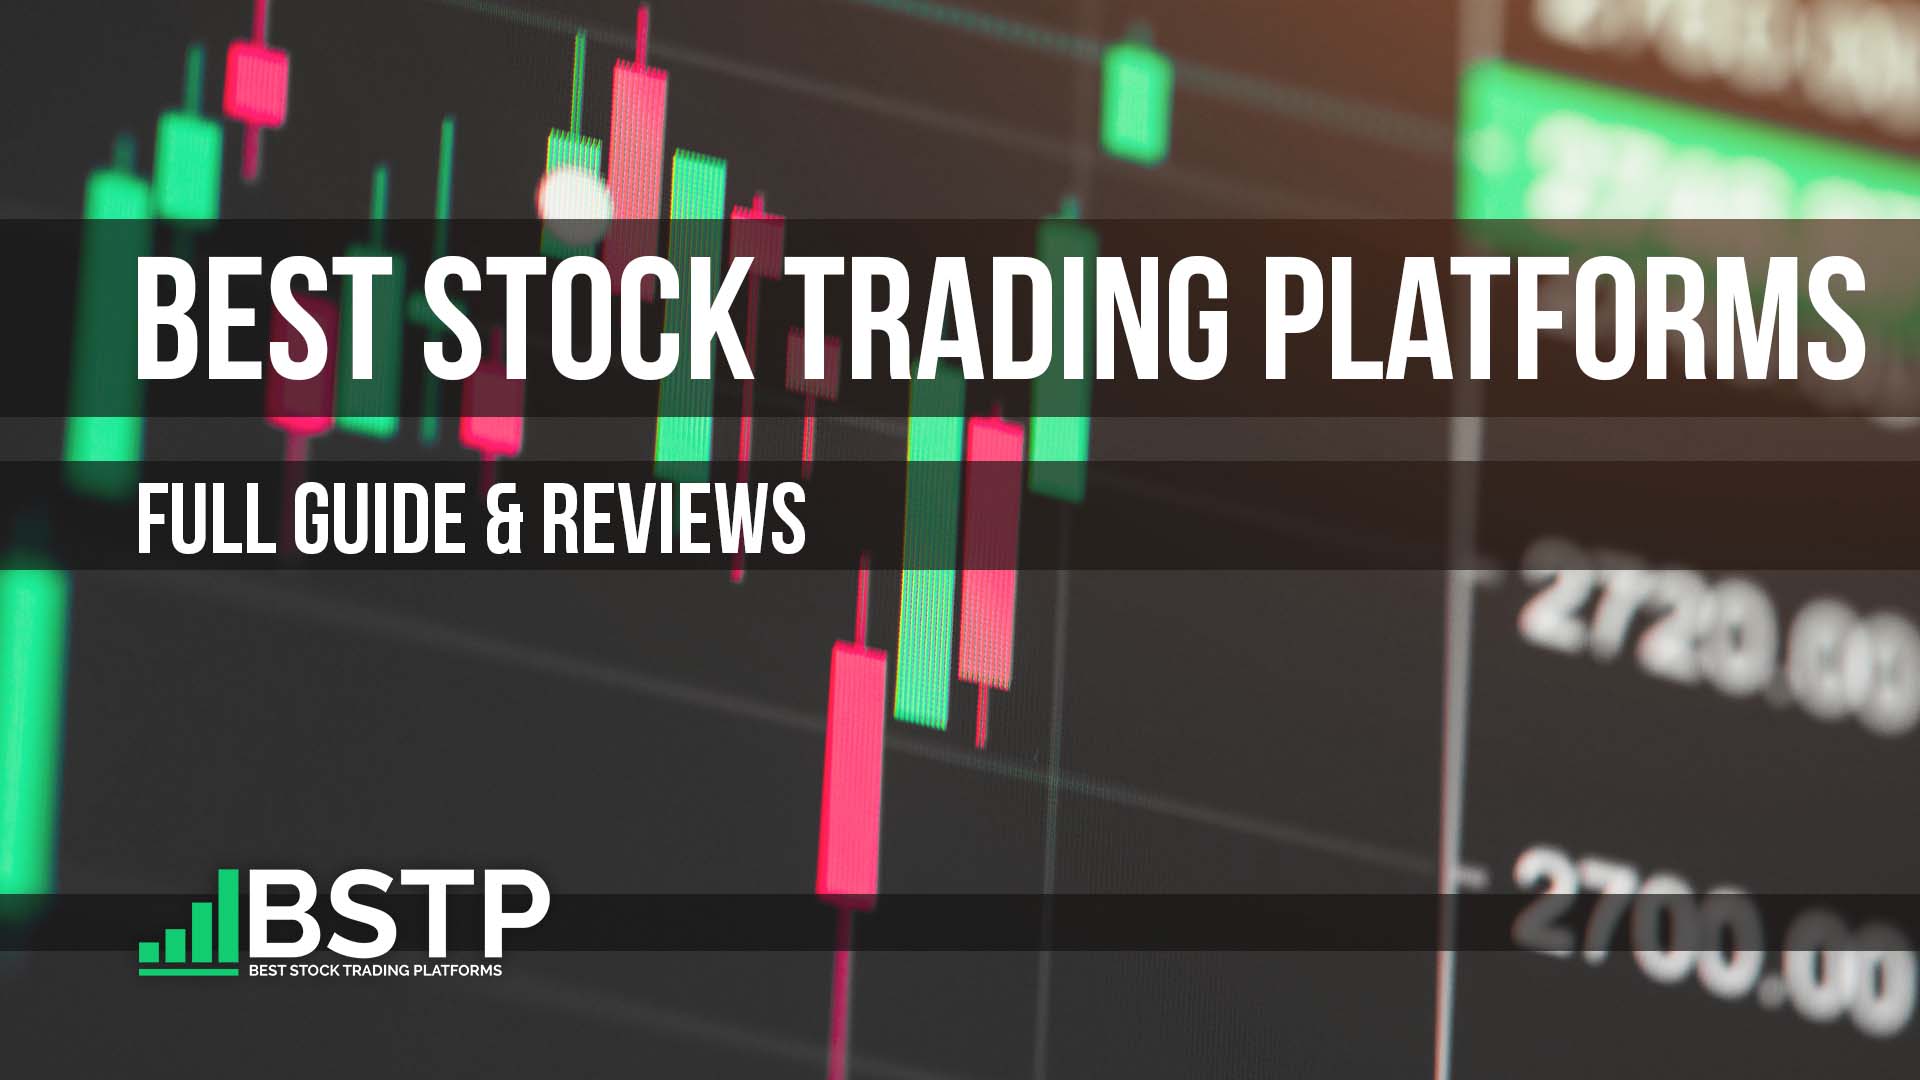 Best Stock Trading Platforms 2021 - Reviews & Guide - BSTP.com